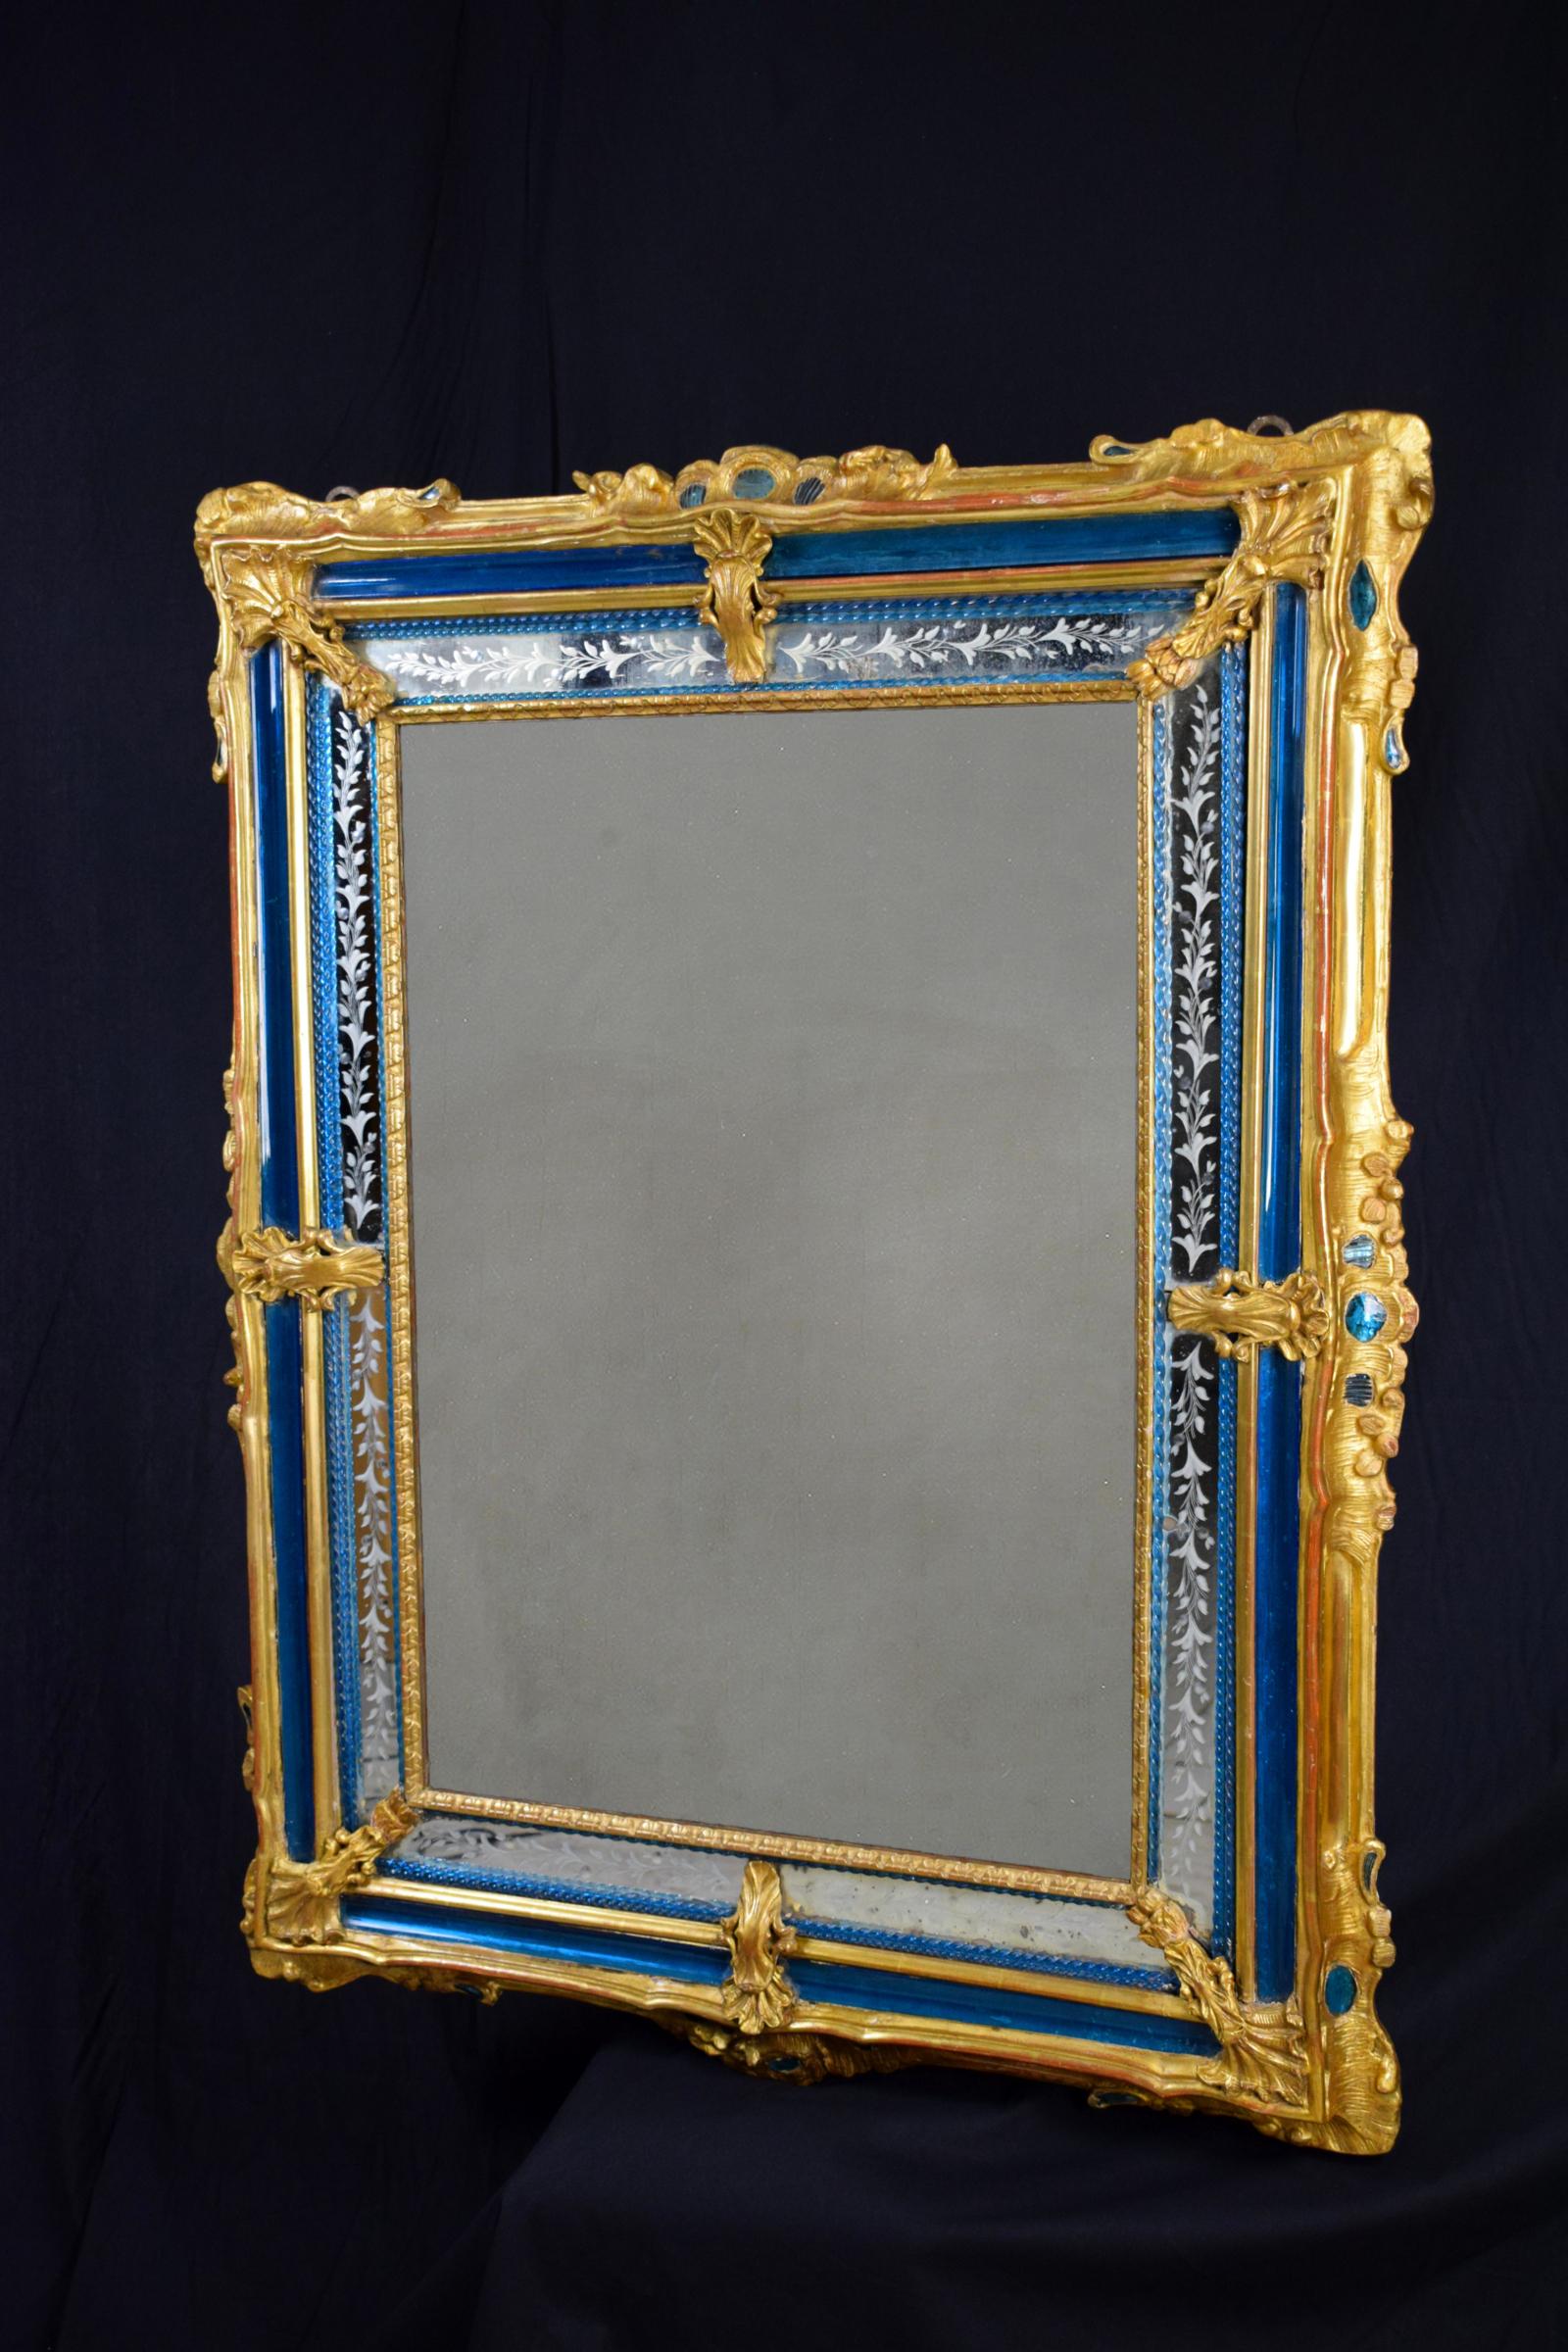 18th Century Rectangular Gilded Wood and Blue Glass Paste Venetian Wall Mirror (Italienisch)